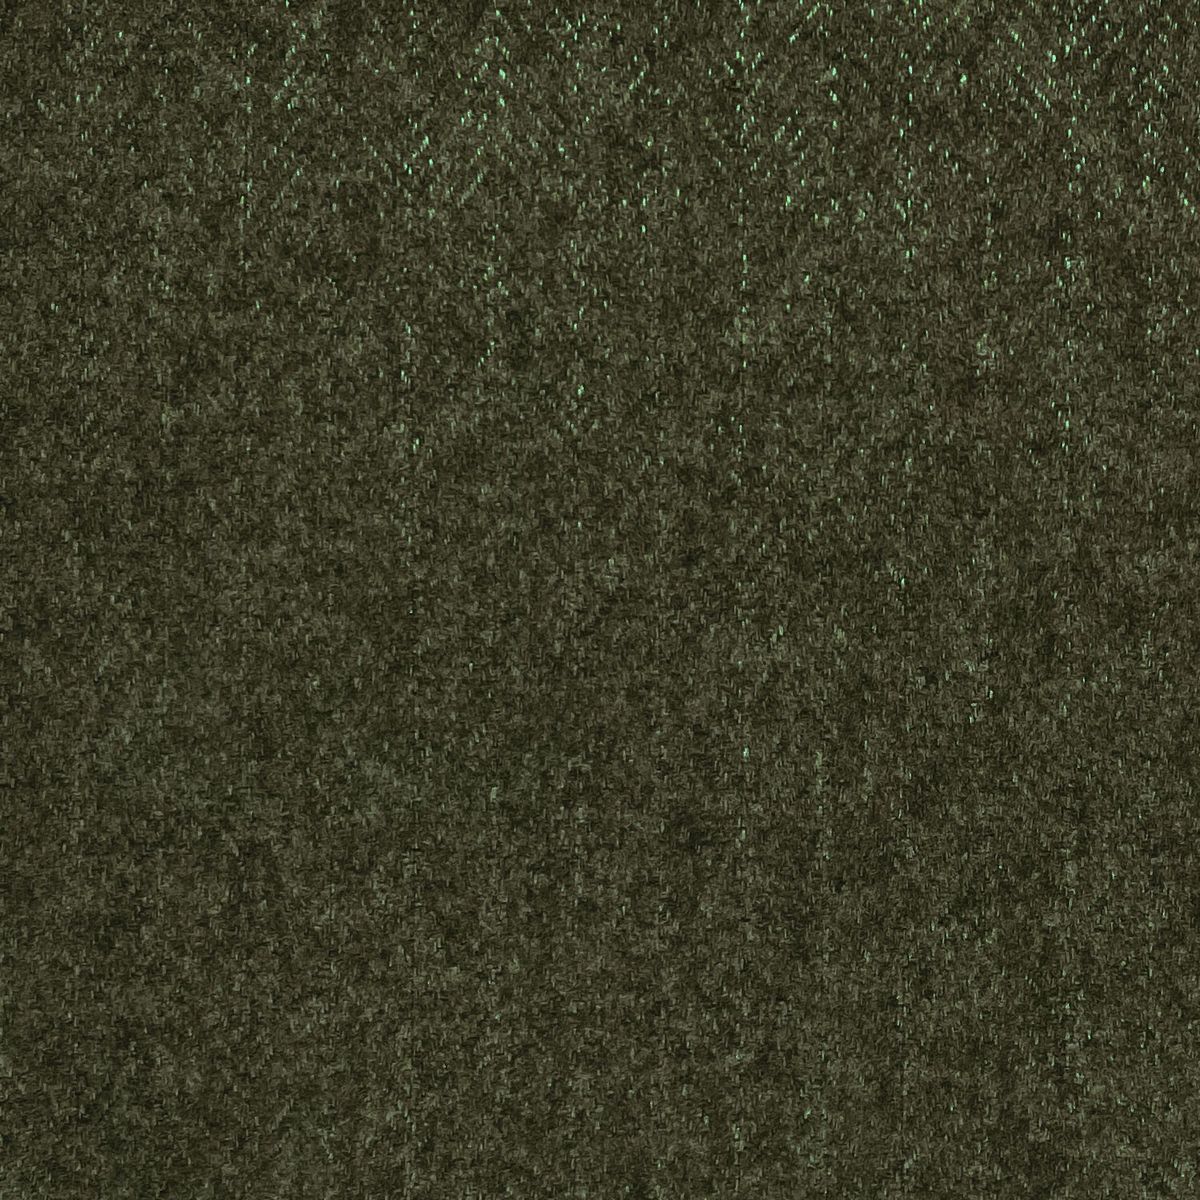 Tweed Forest Fabric by Chatham Glyn